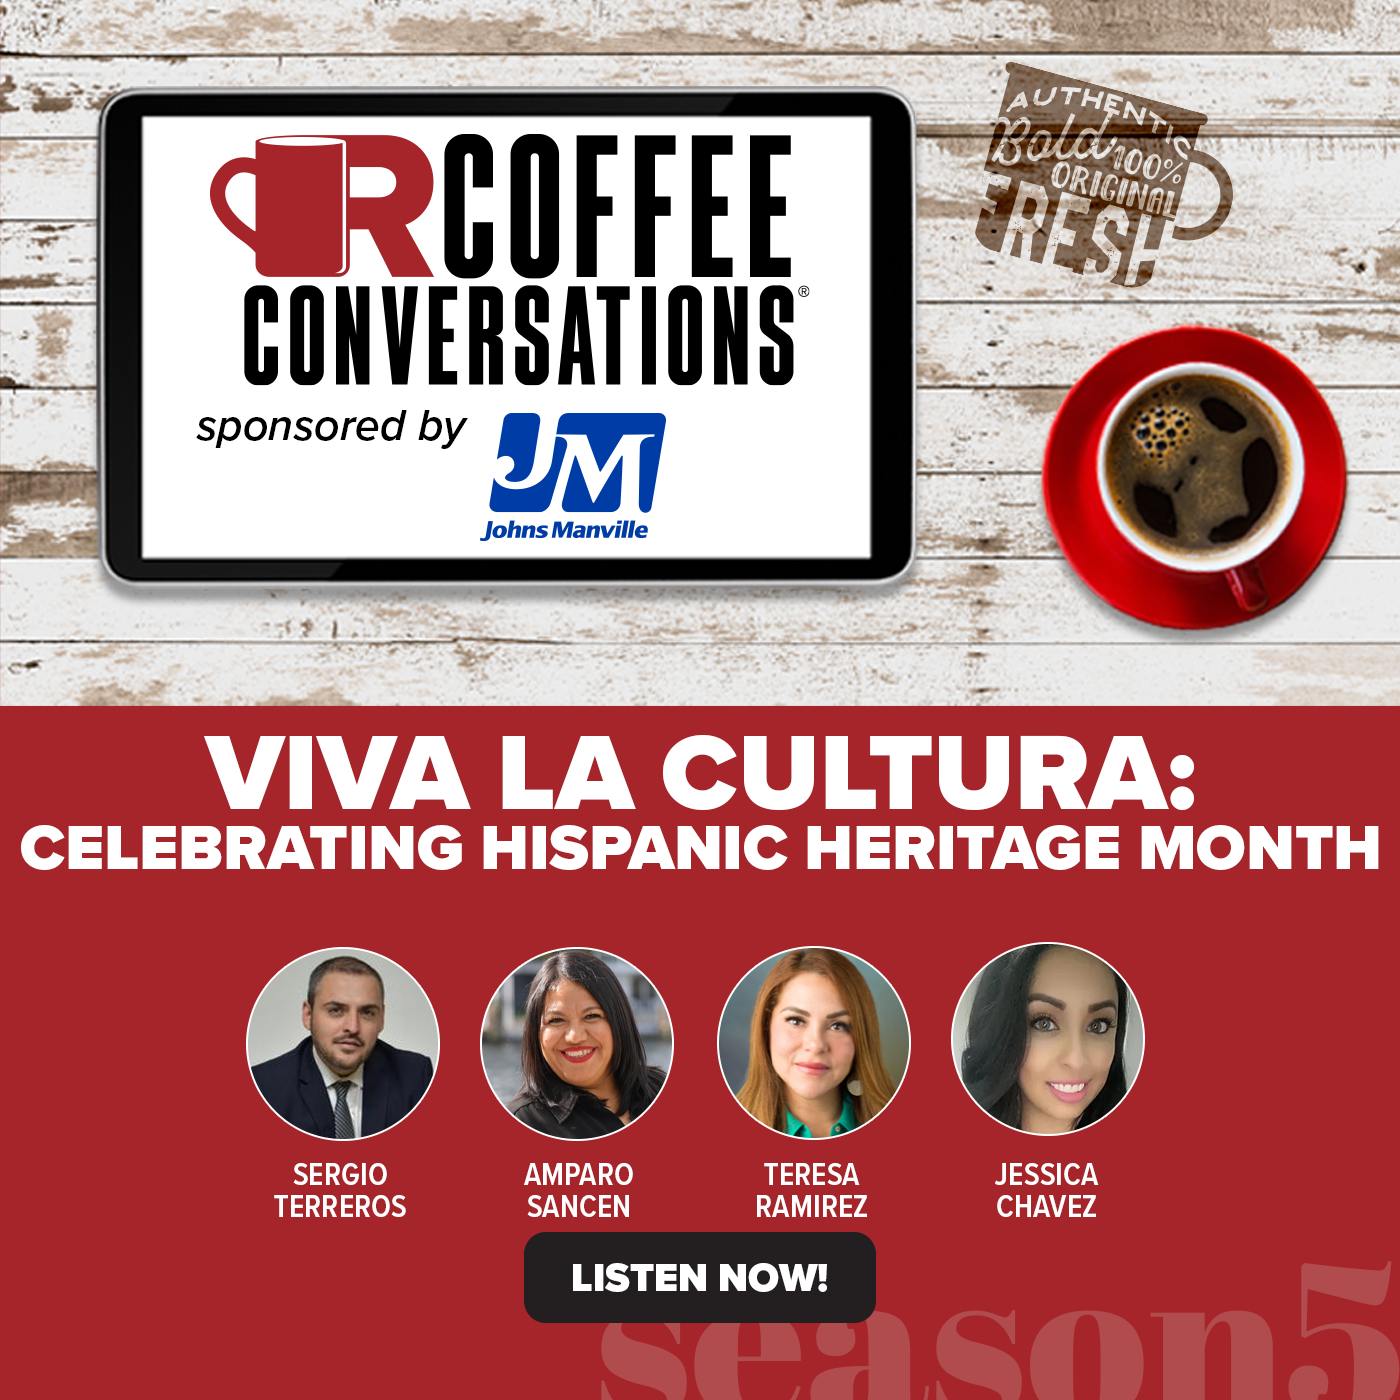 JM - Coffee Conversations - Viva la Cultura: Celebrating Hispanic Heritage Month - POD